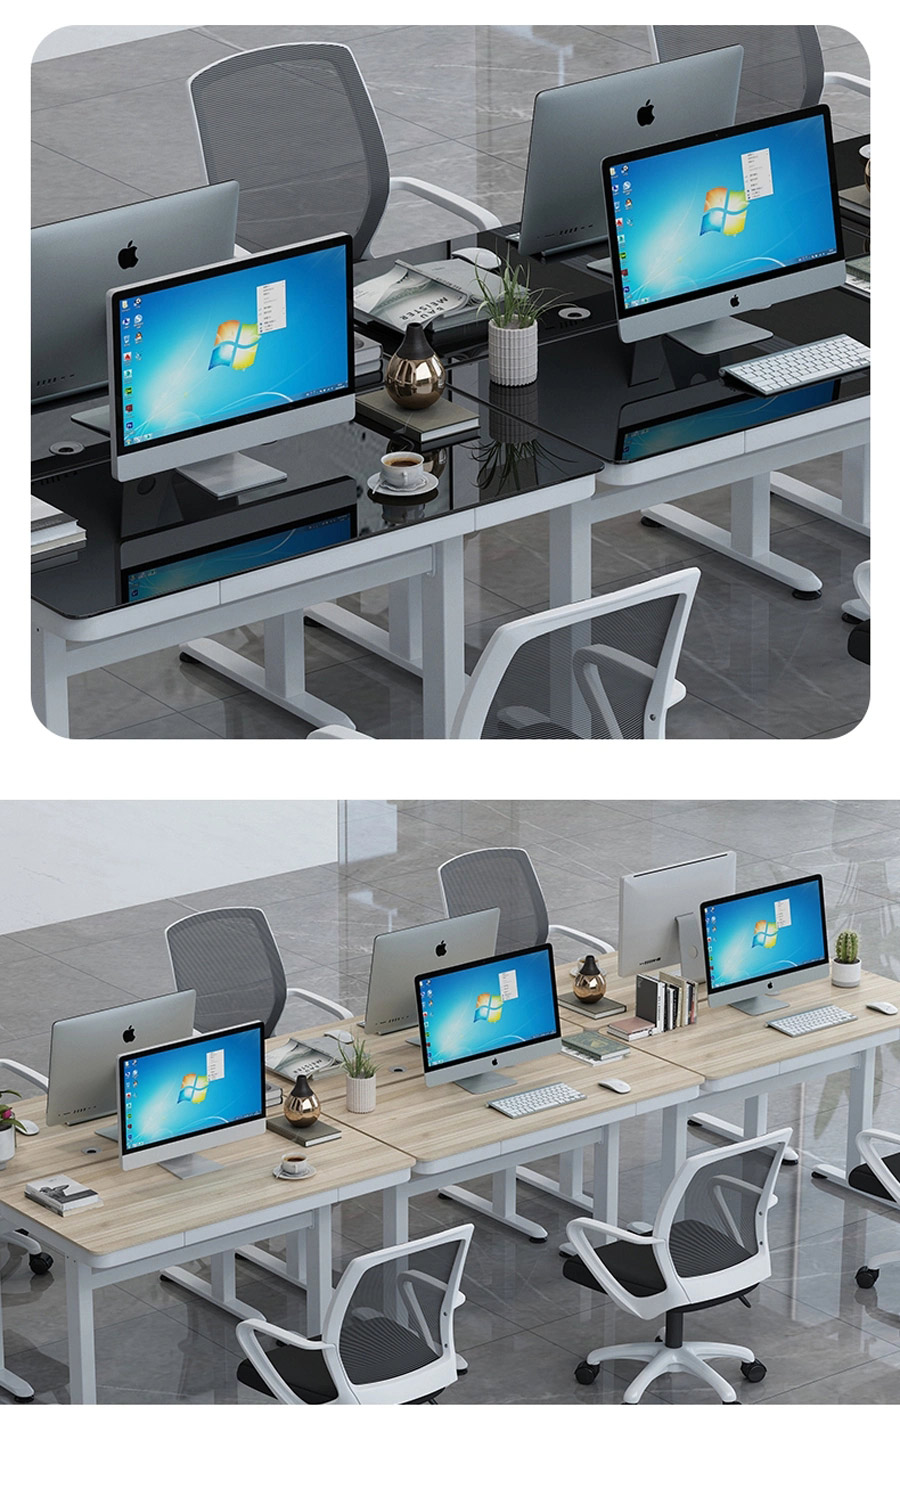 Usage Scenario of Manul Height Adjustable Desk